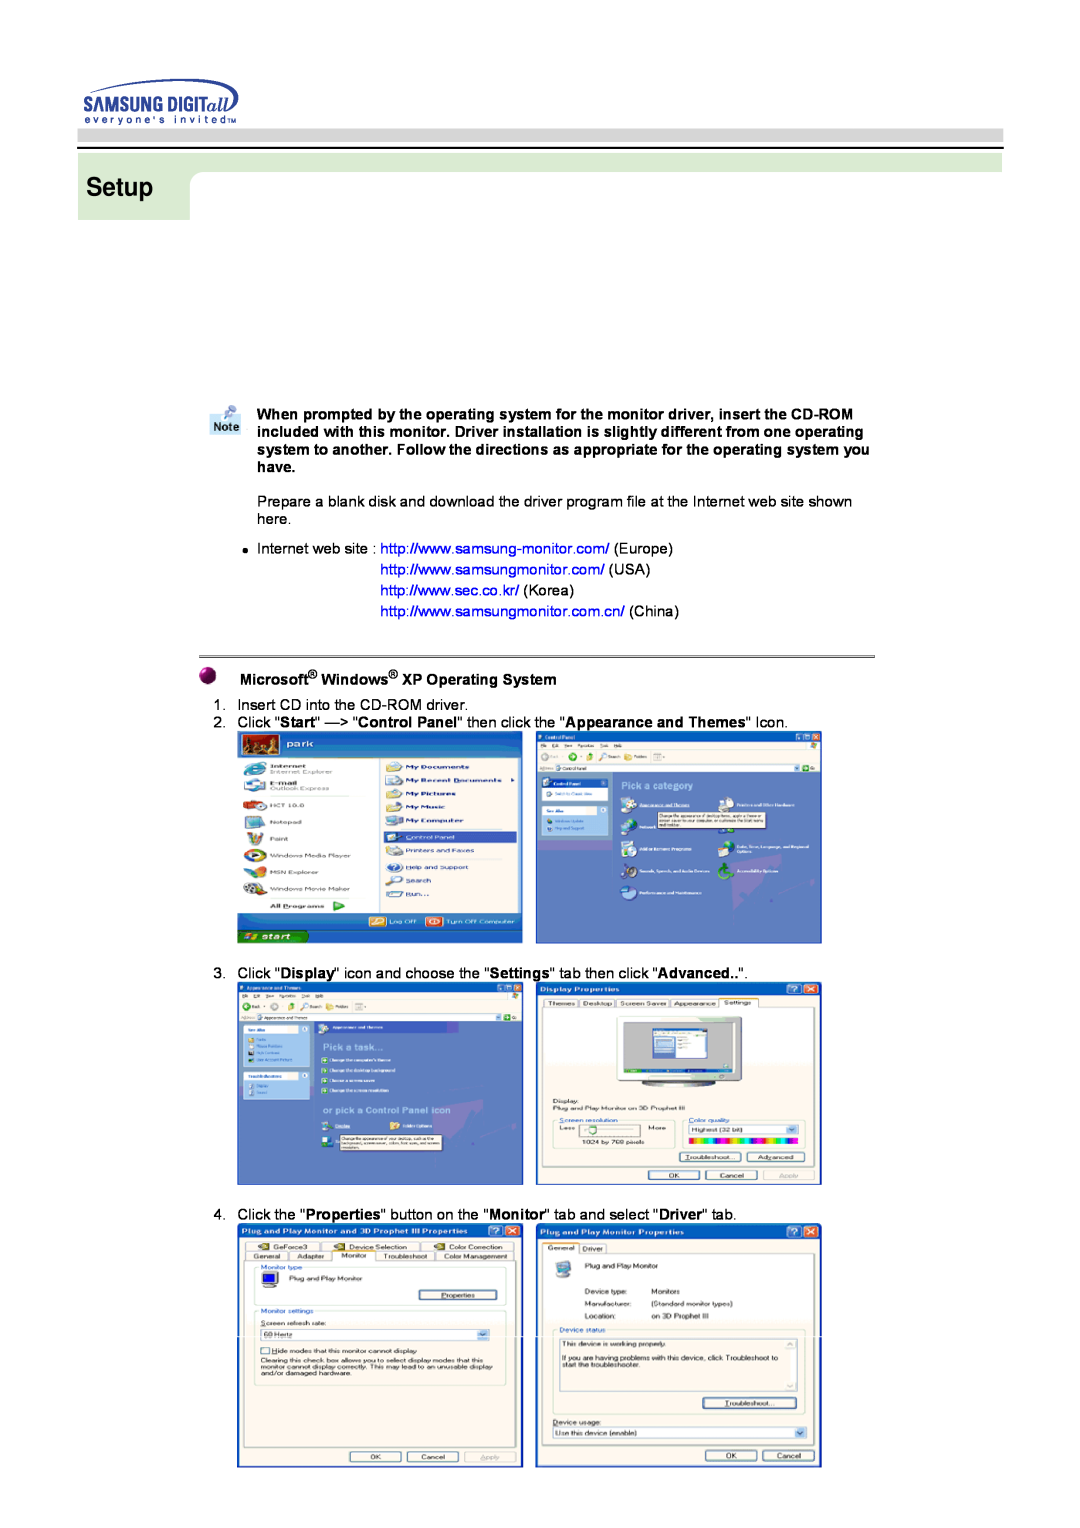 Samsung 750s, 753s, 753v, 753Ms, 750Ms manual Setup, Microsoft Windows XP Operating System 